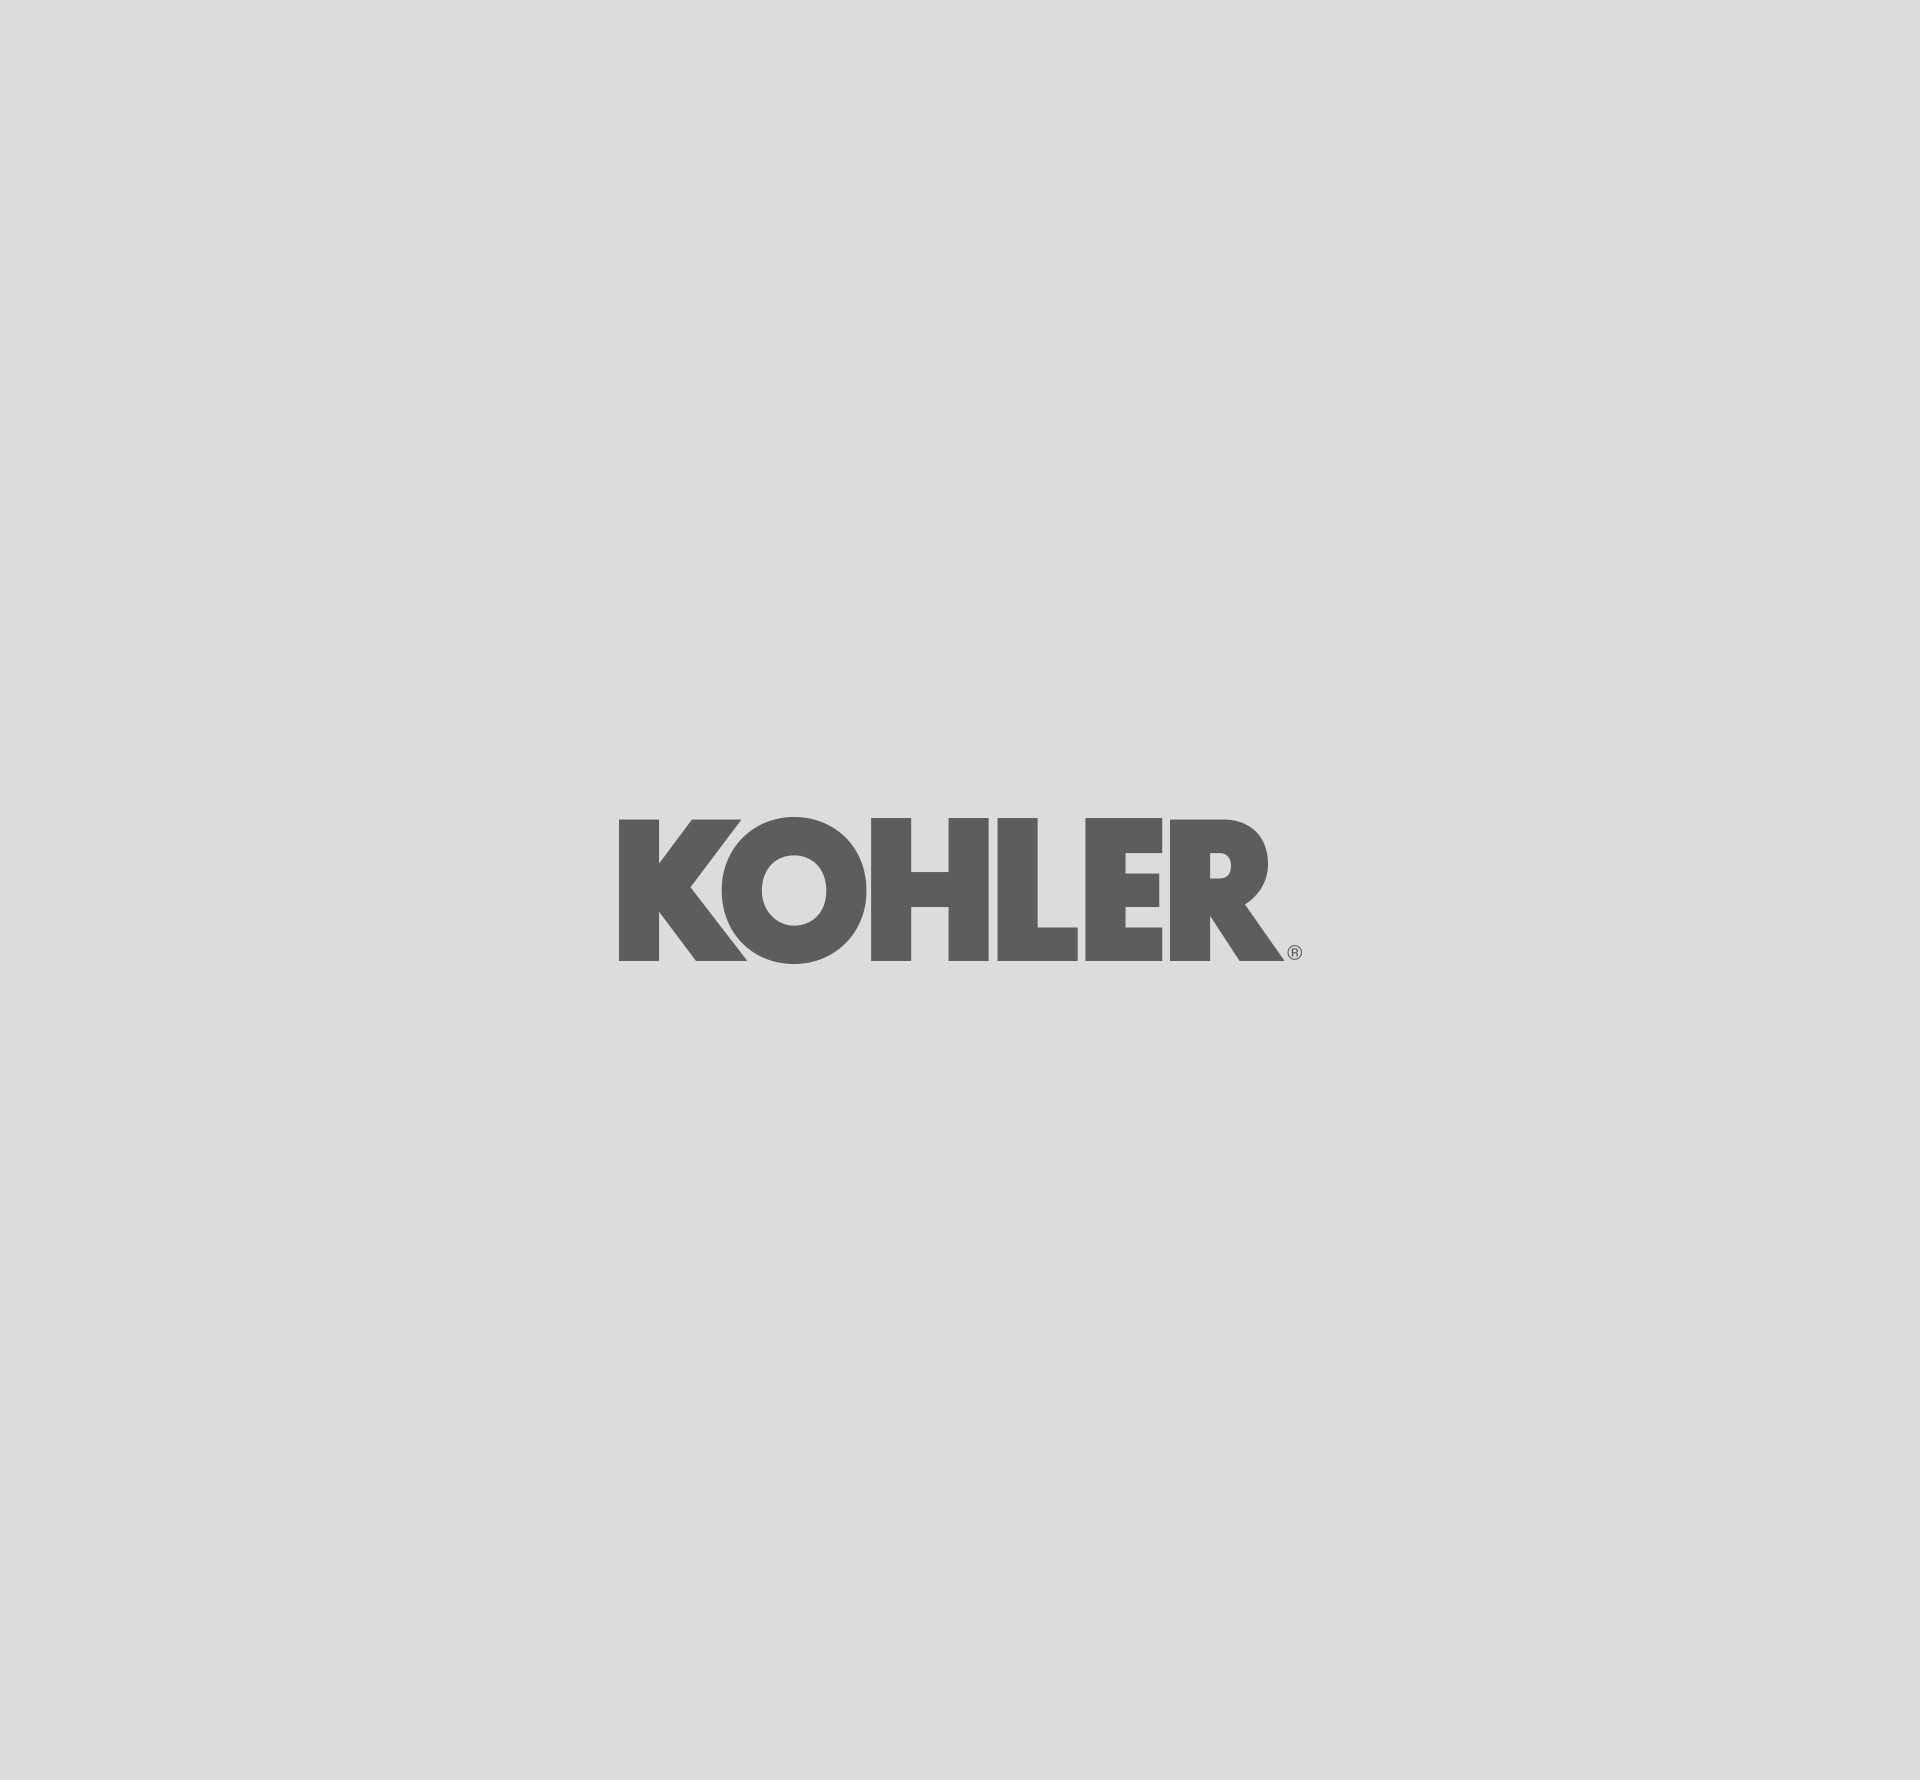 Kohler are a long time client of Rodd Design